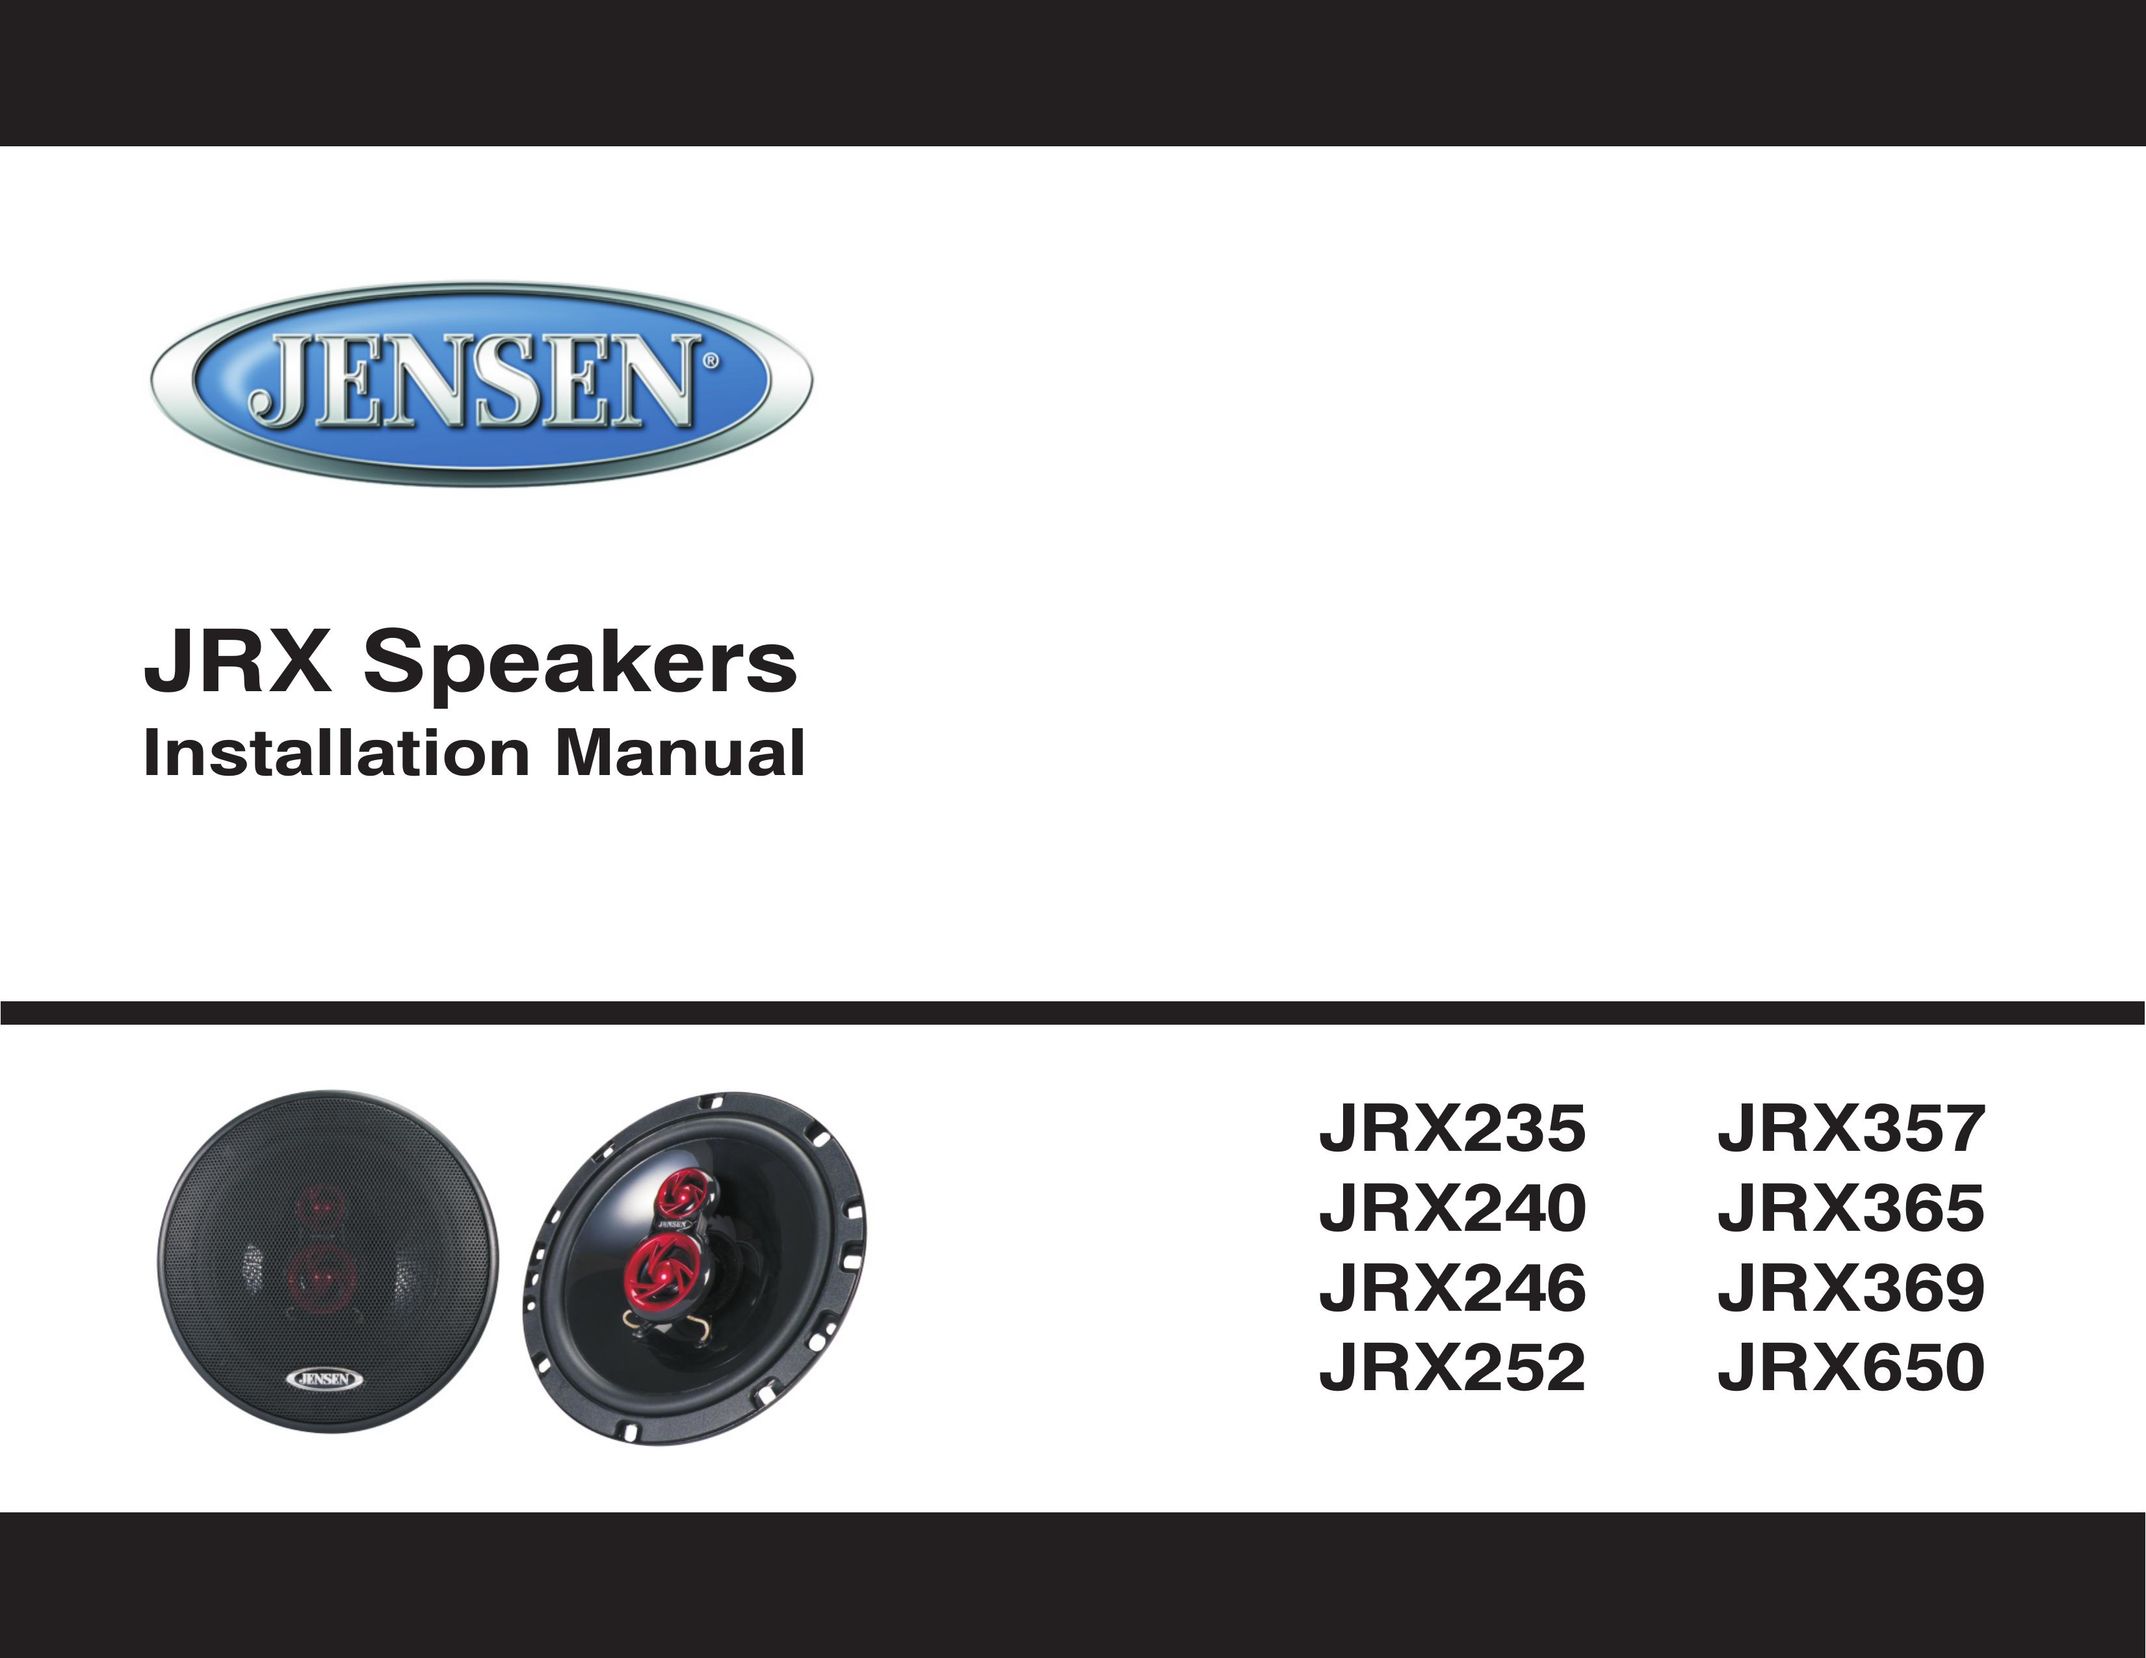 Jensen JRX365 Speaker User Manual